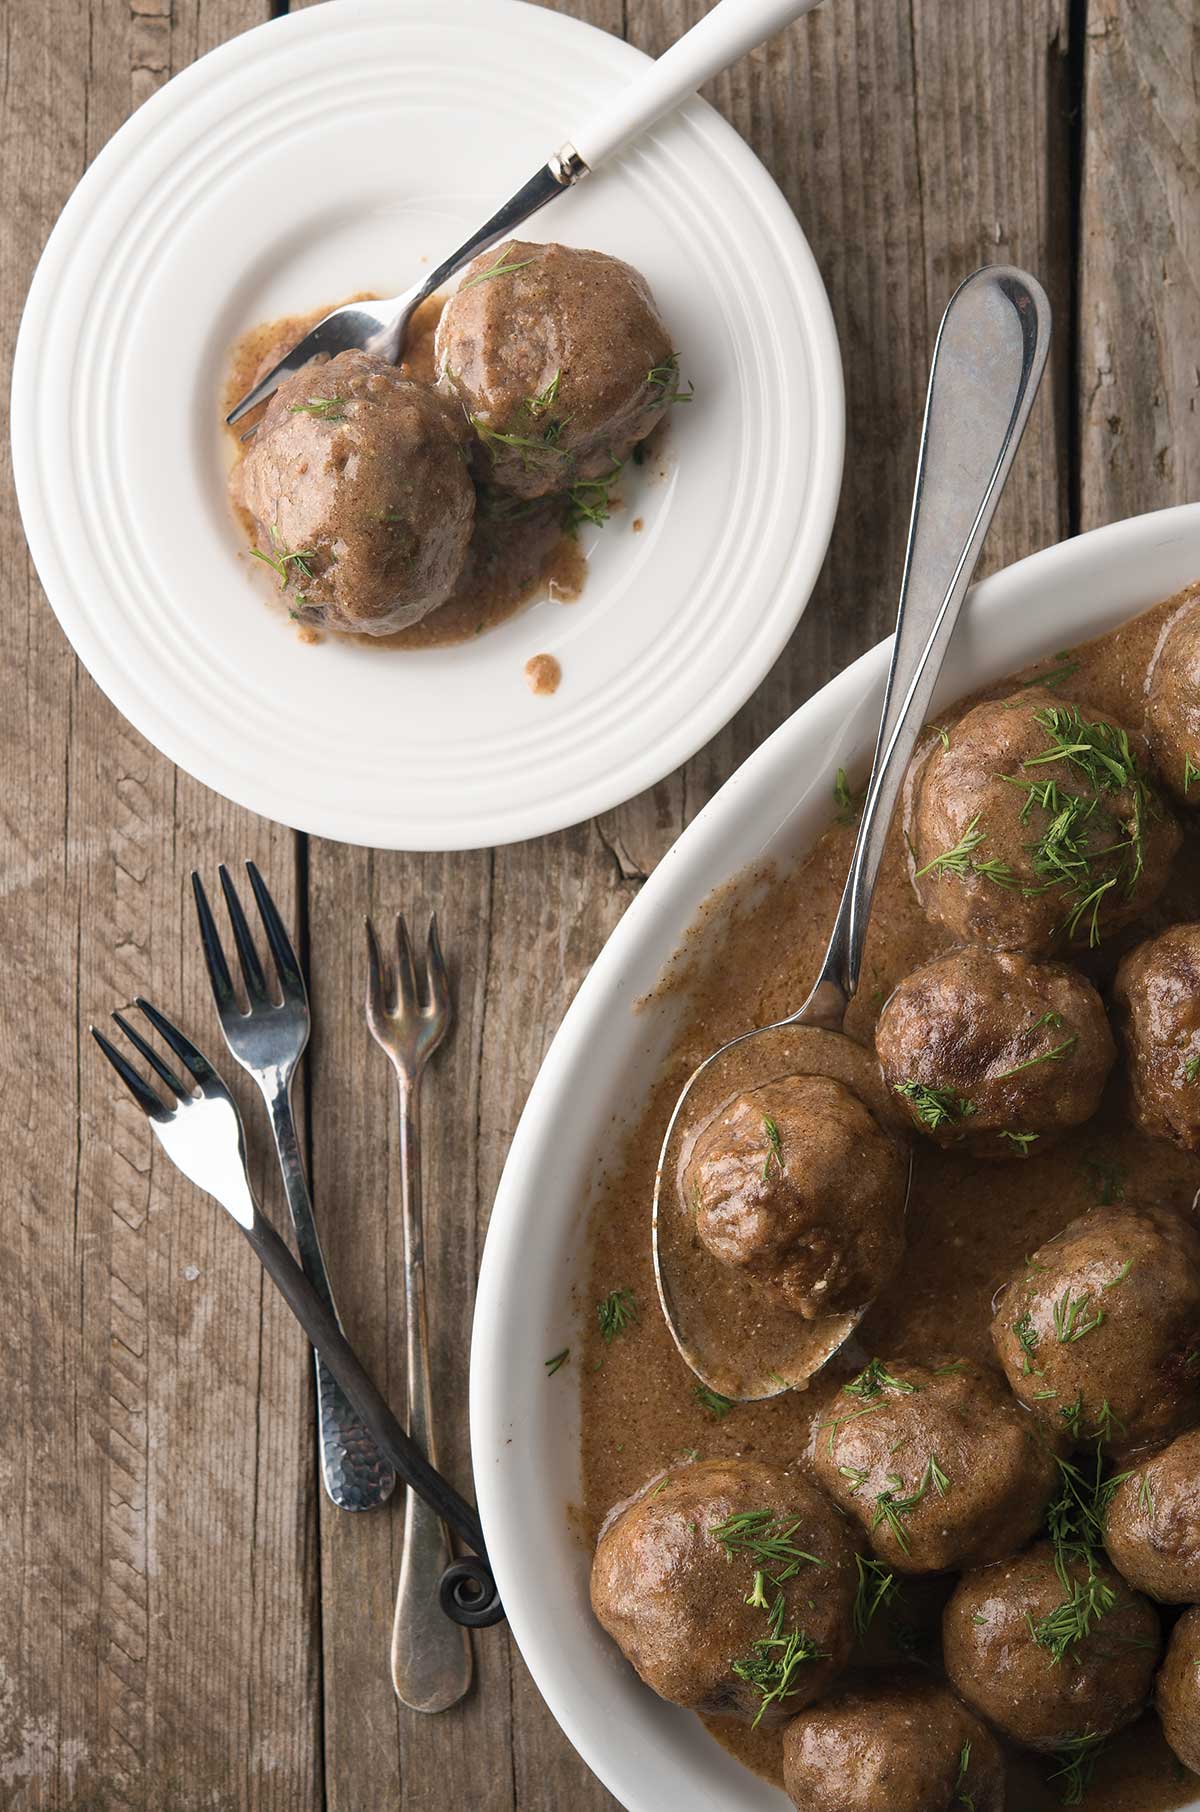 A platter of authentic Swedish meatballs